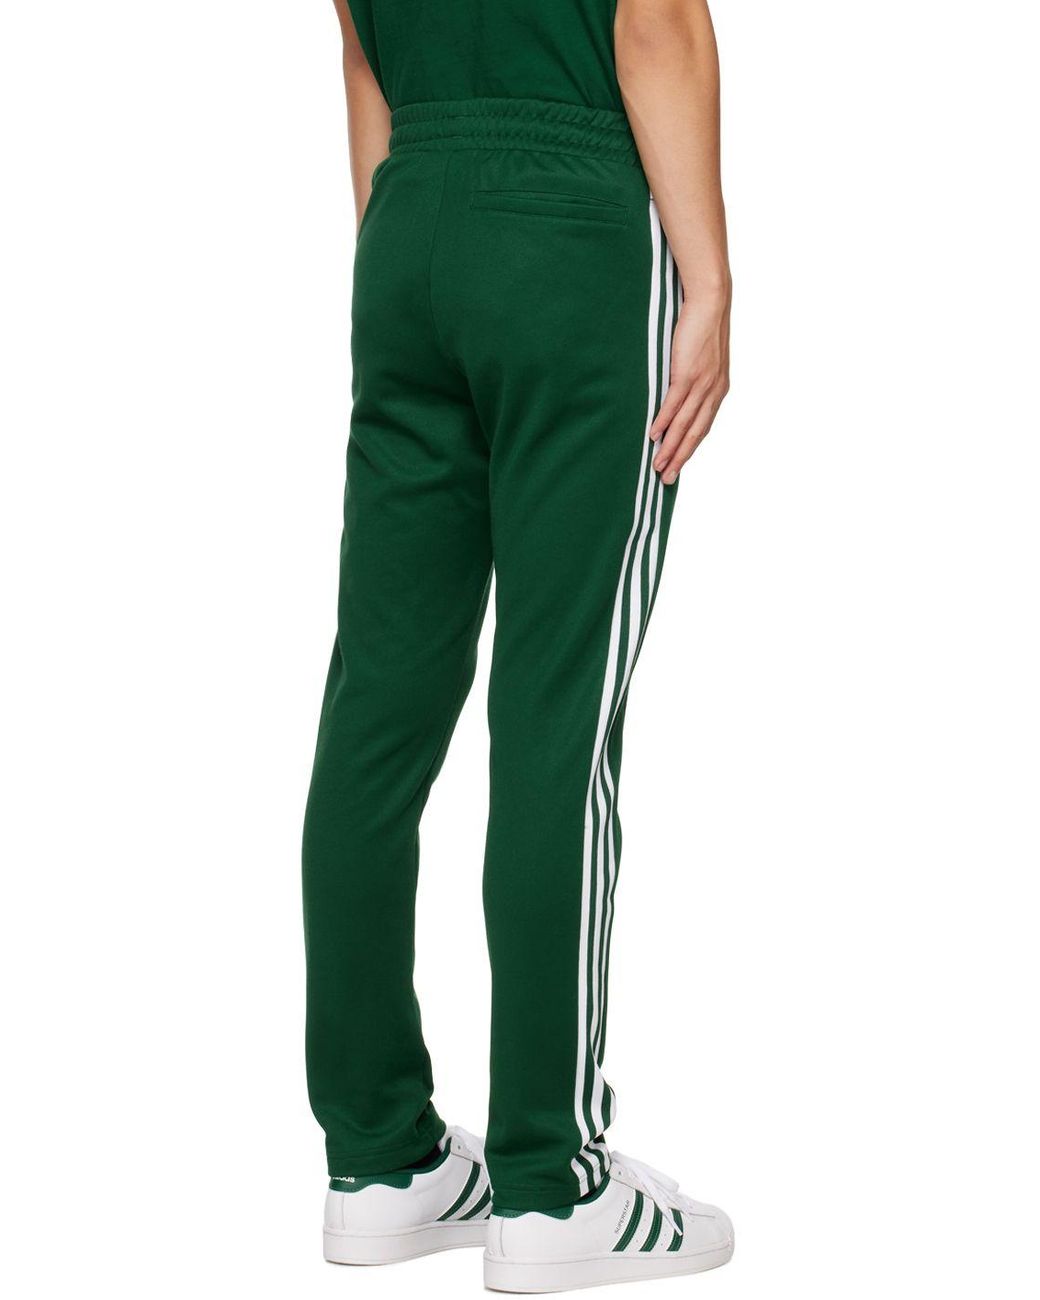 Adicolor Green SST Track Pants